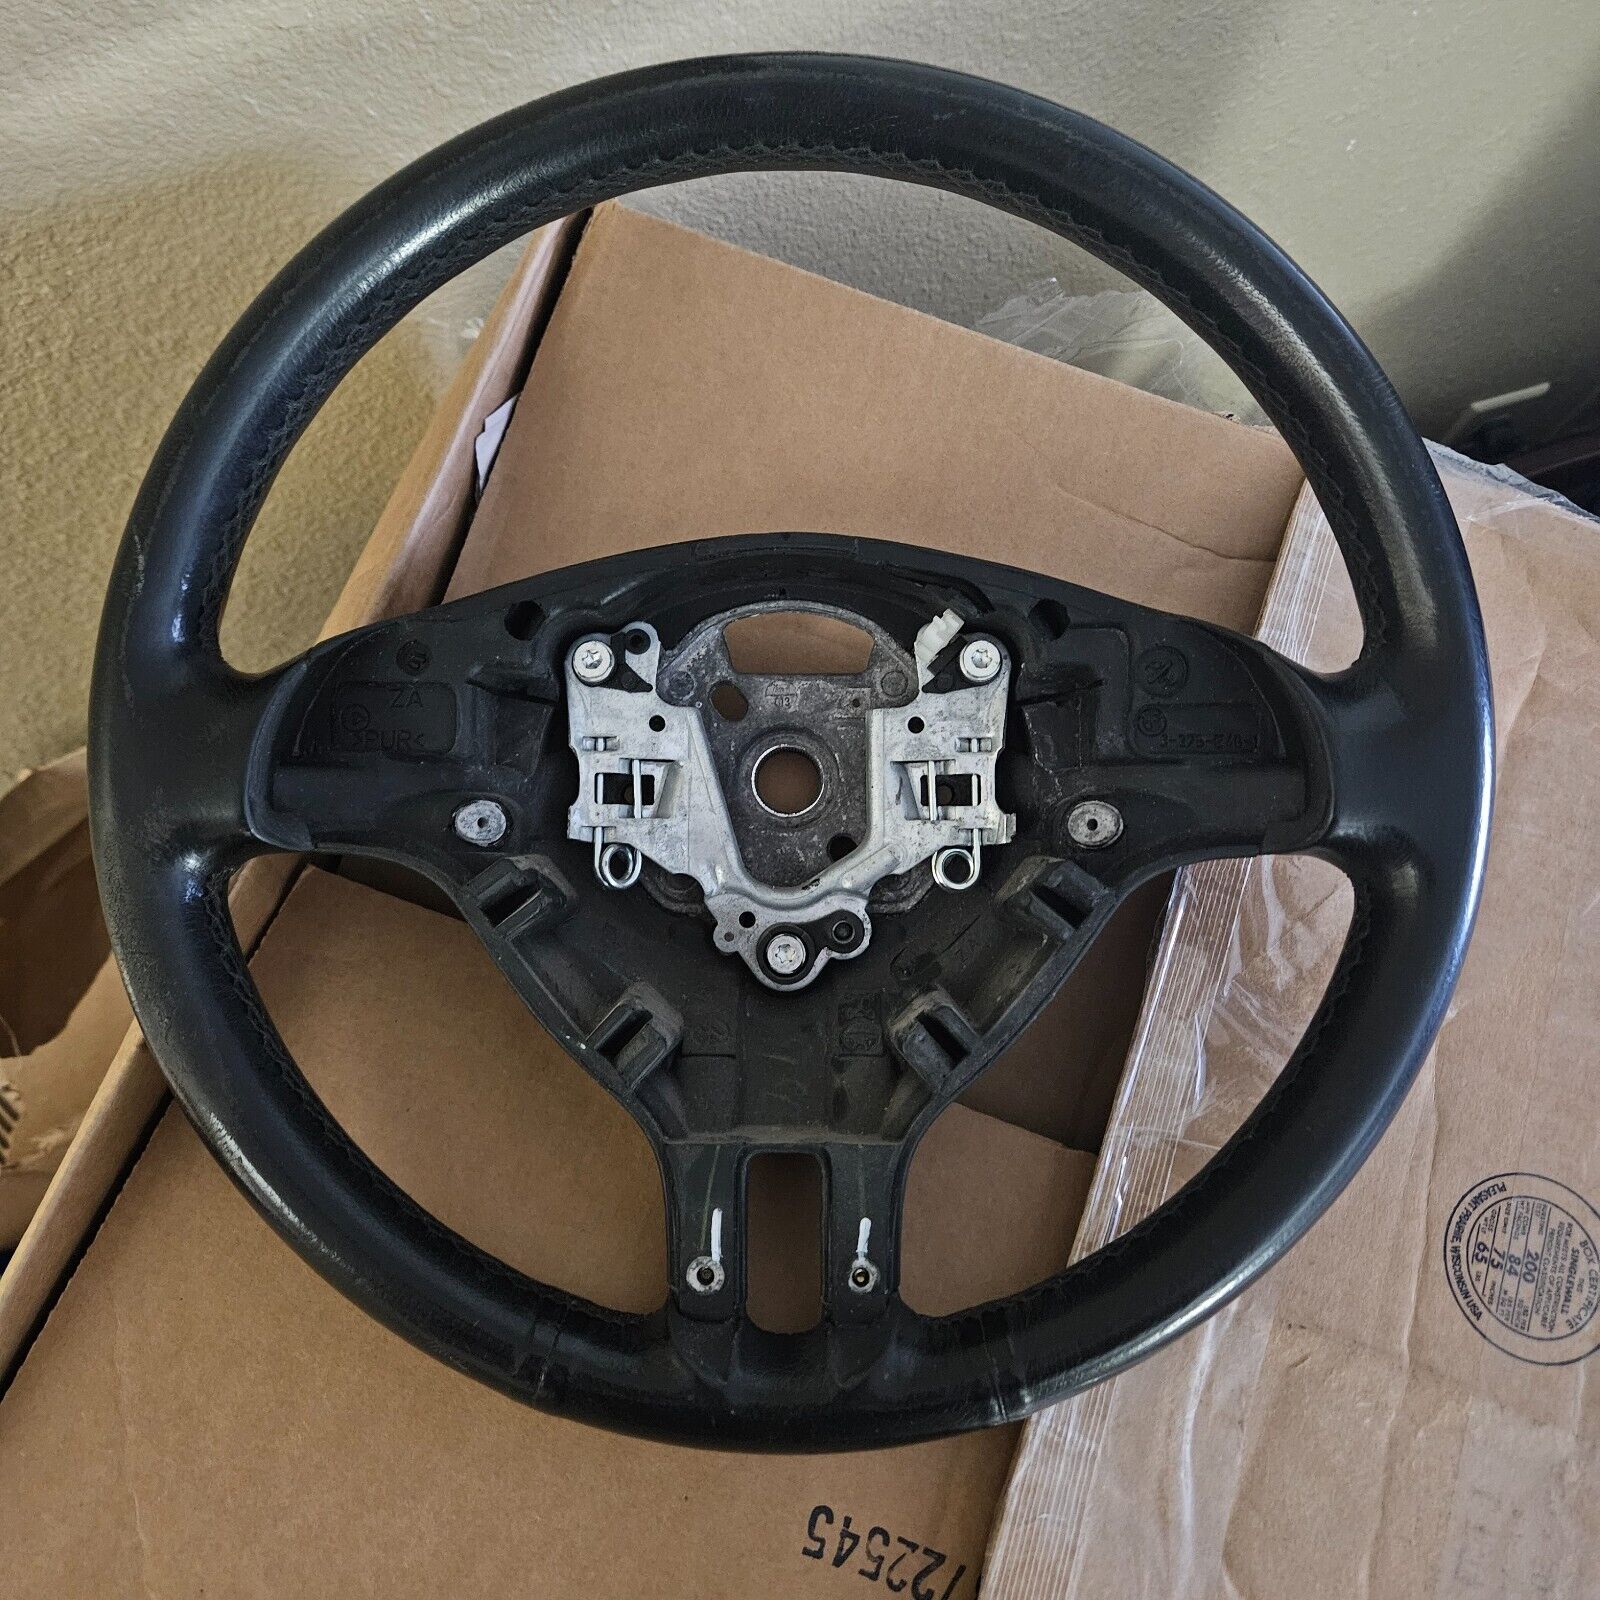 01-06 Bmw E46 M3 E39 E53 E83 Leather Steering Wheel - no controls/trim